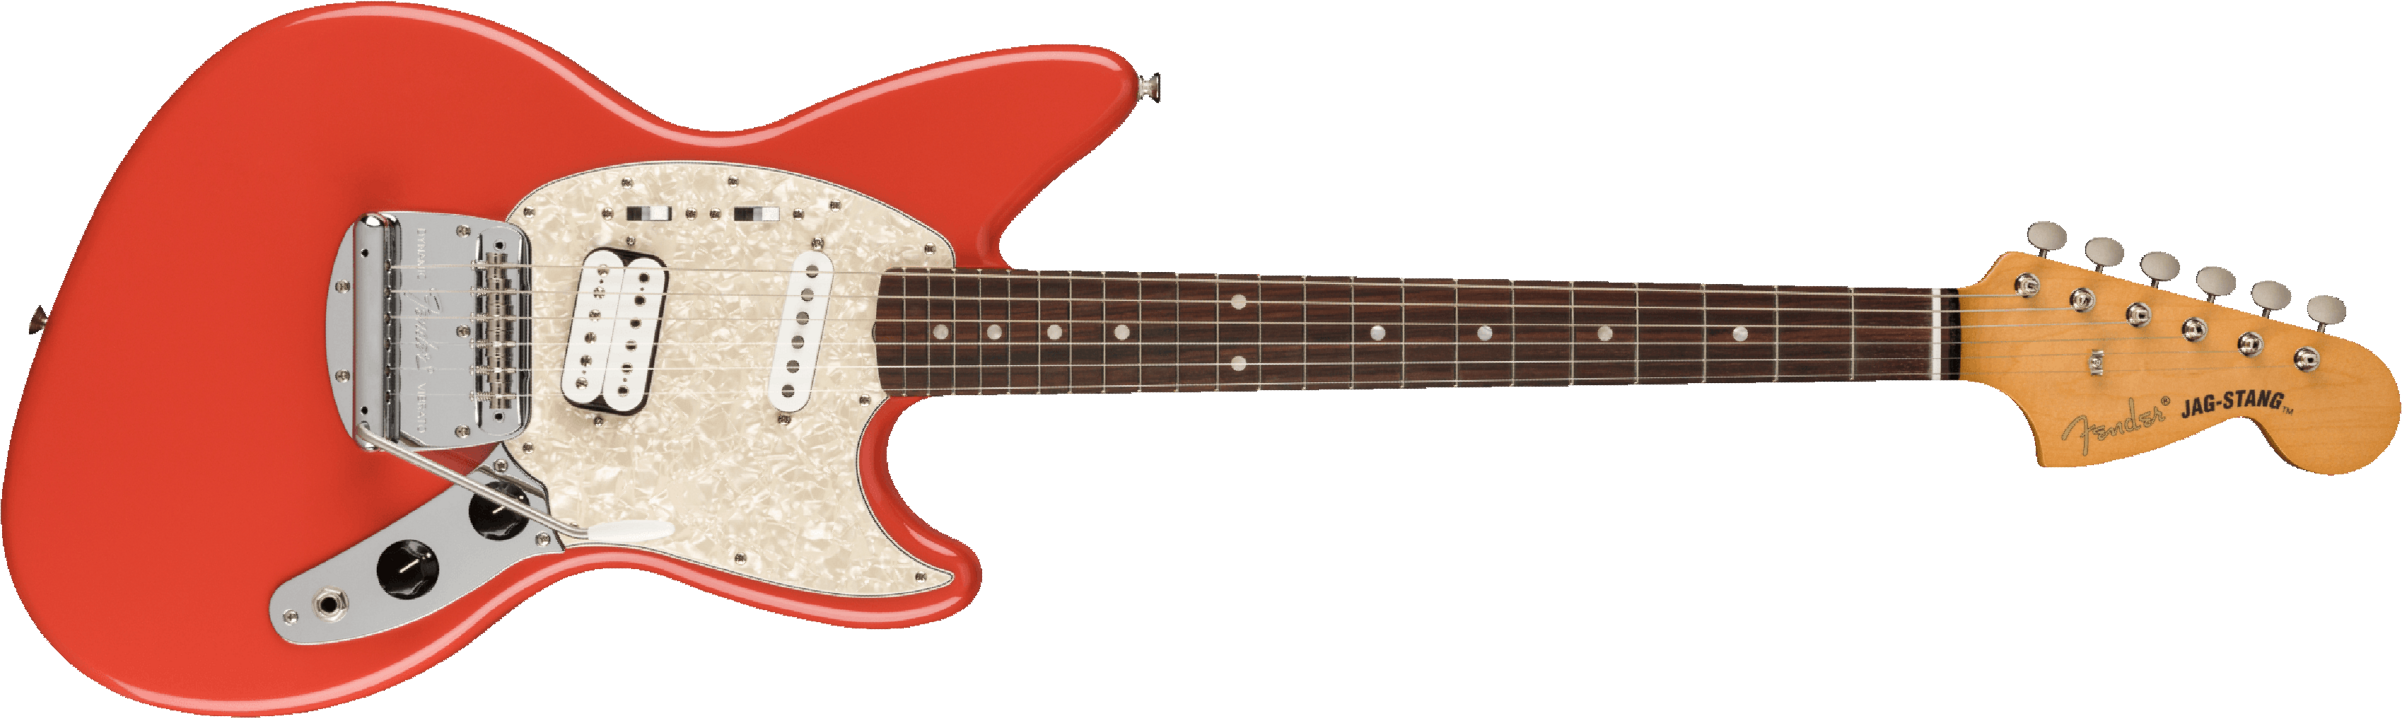 Fender Jag-stang Kurt Cobain Artist Hs Trem Rw - Fiesta Red - Retro rock electric guitar - Main picture